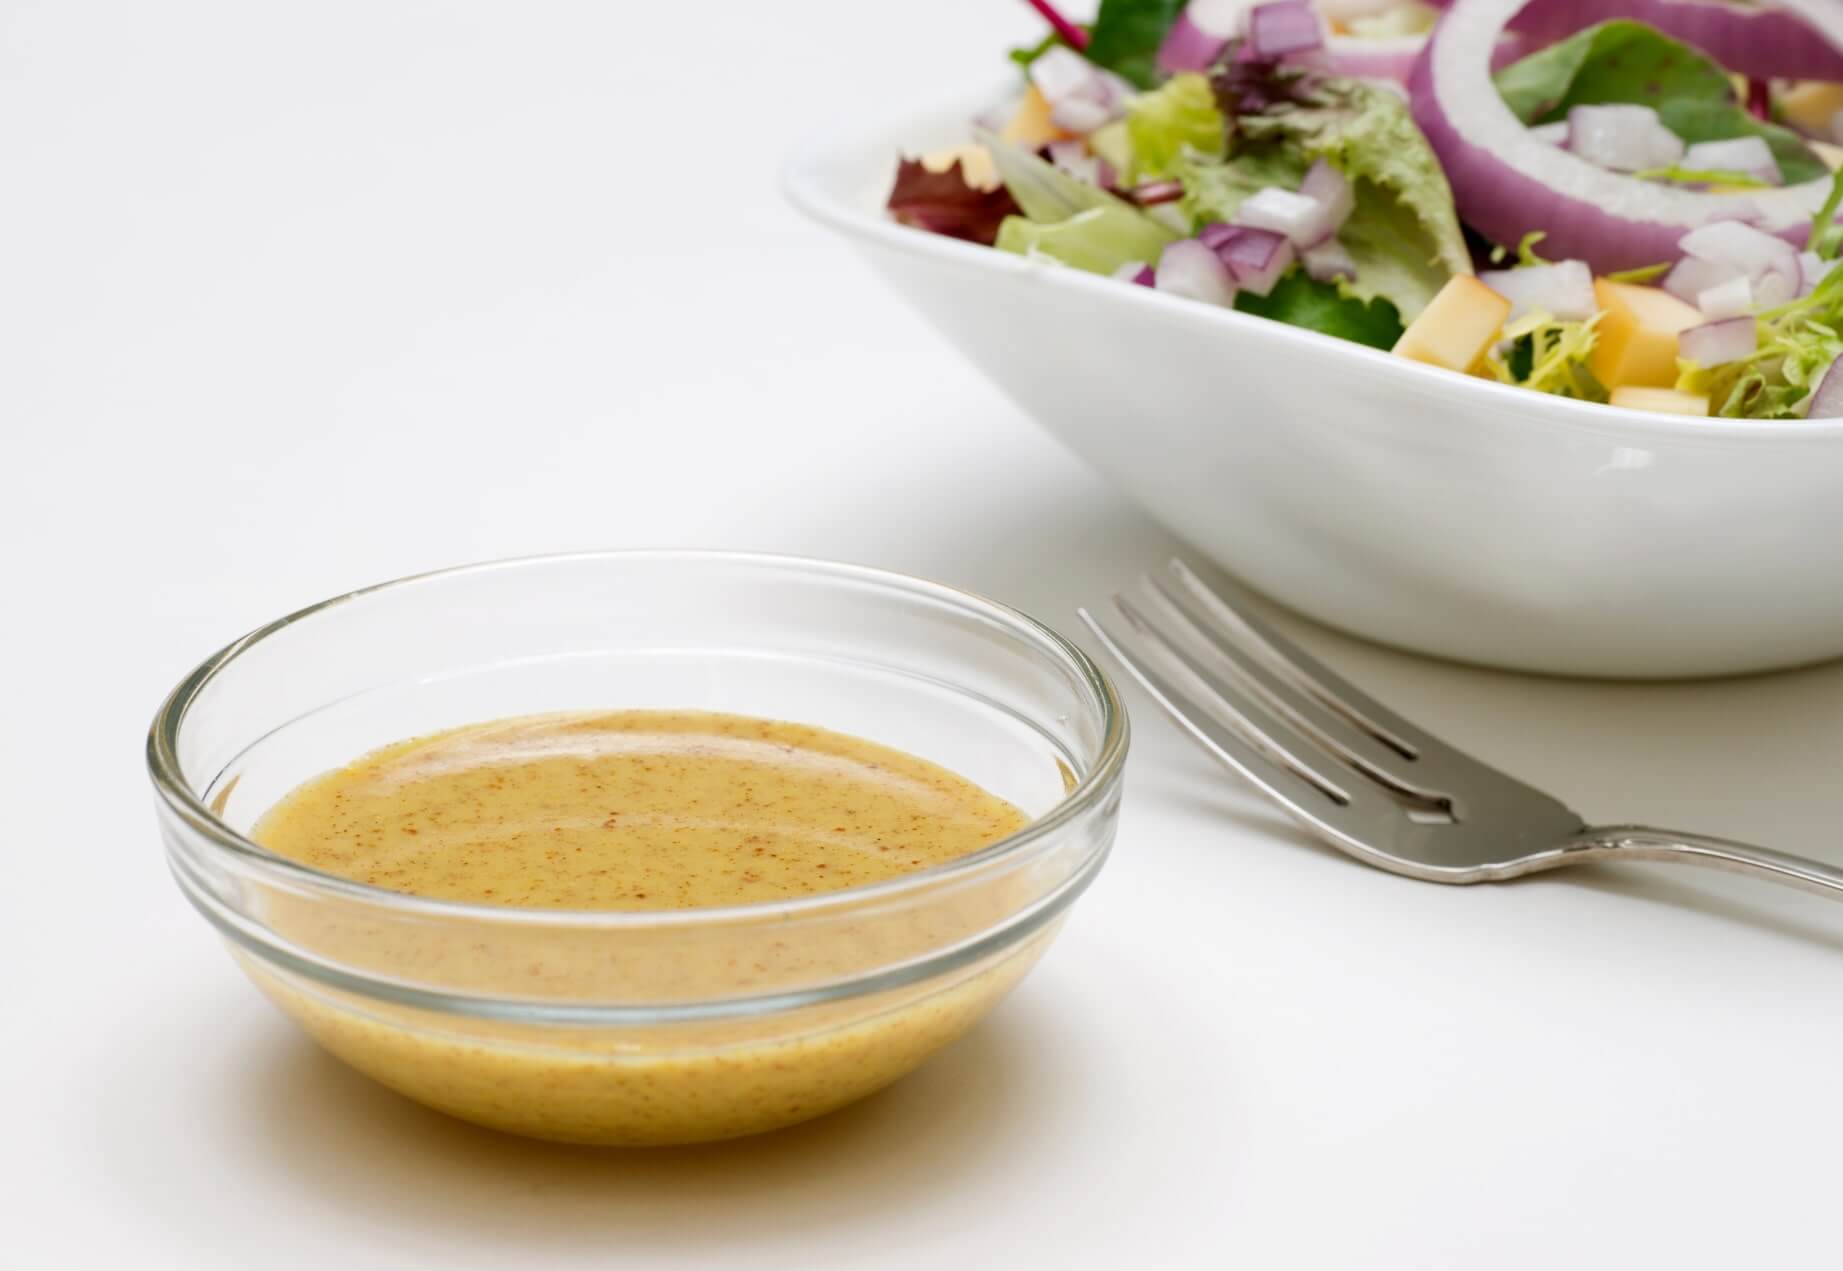 Mustard Jar Vinaigrette Salad Dressing: